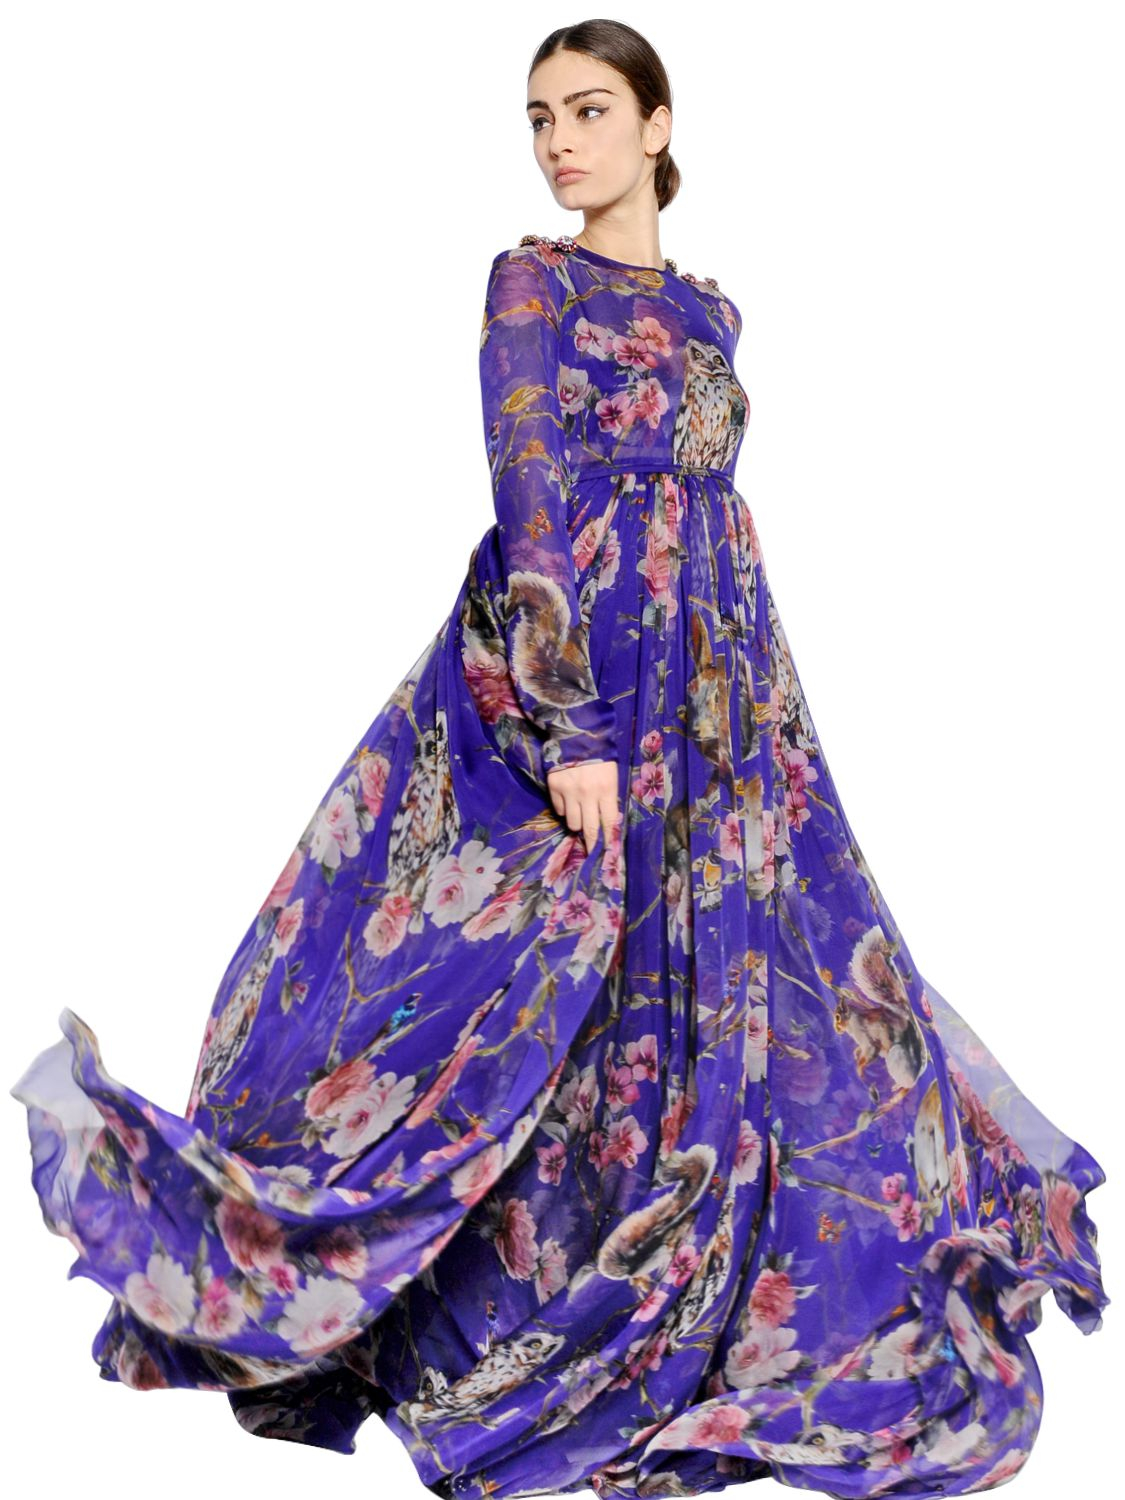 Dolce & Gabbana Floral Printed Silk Chiffon Dress in Purple | Lyst